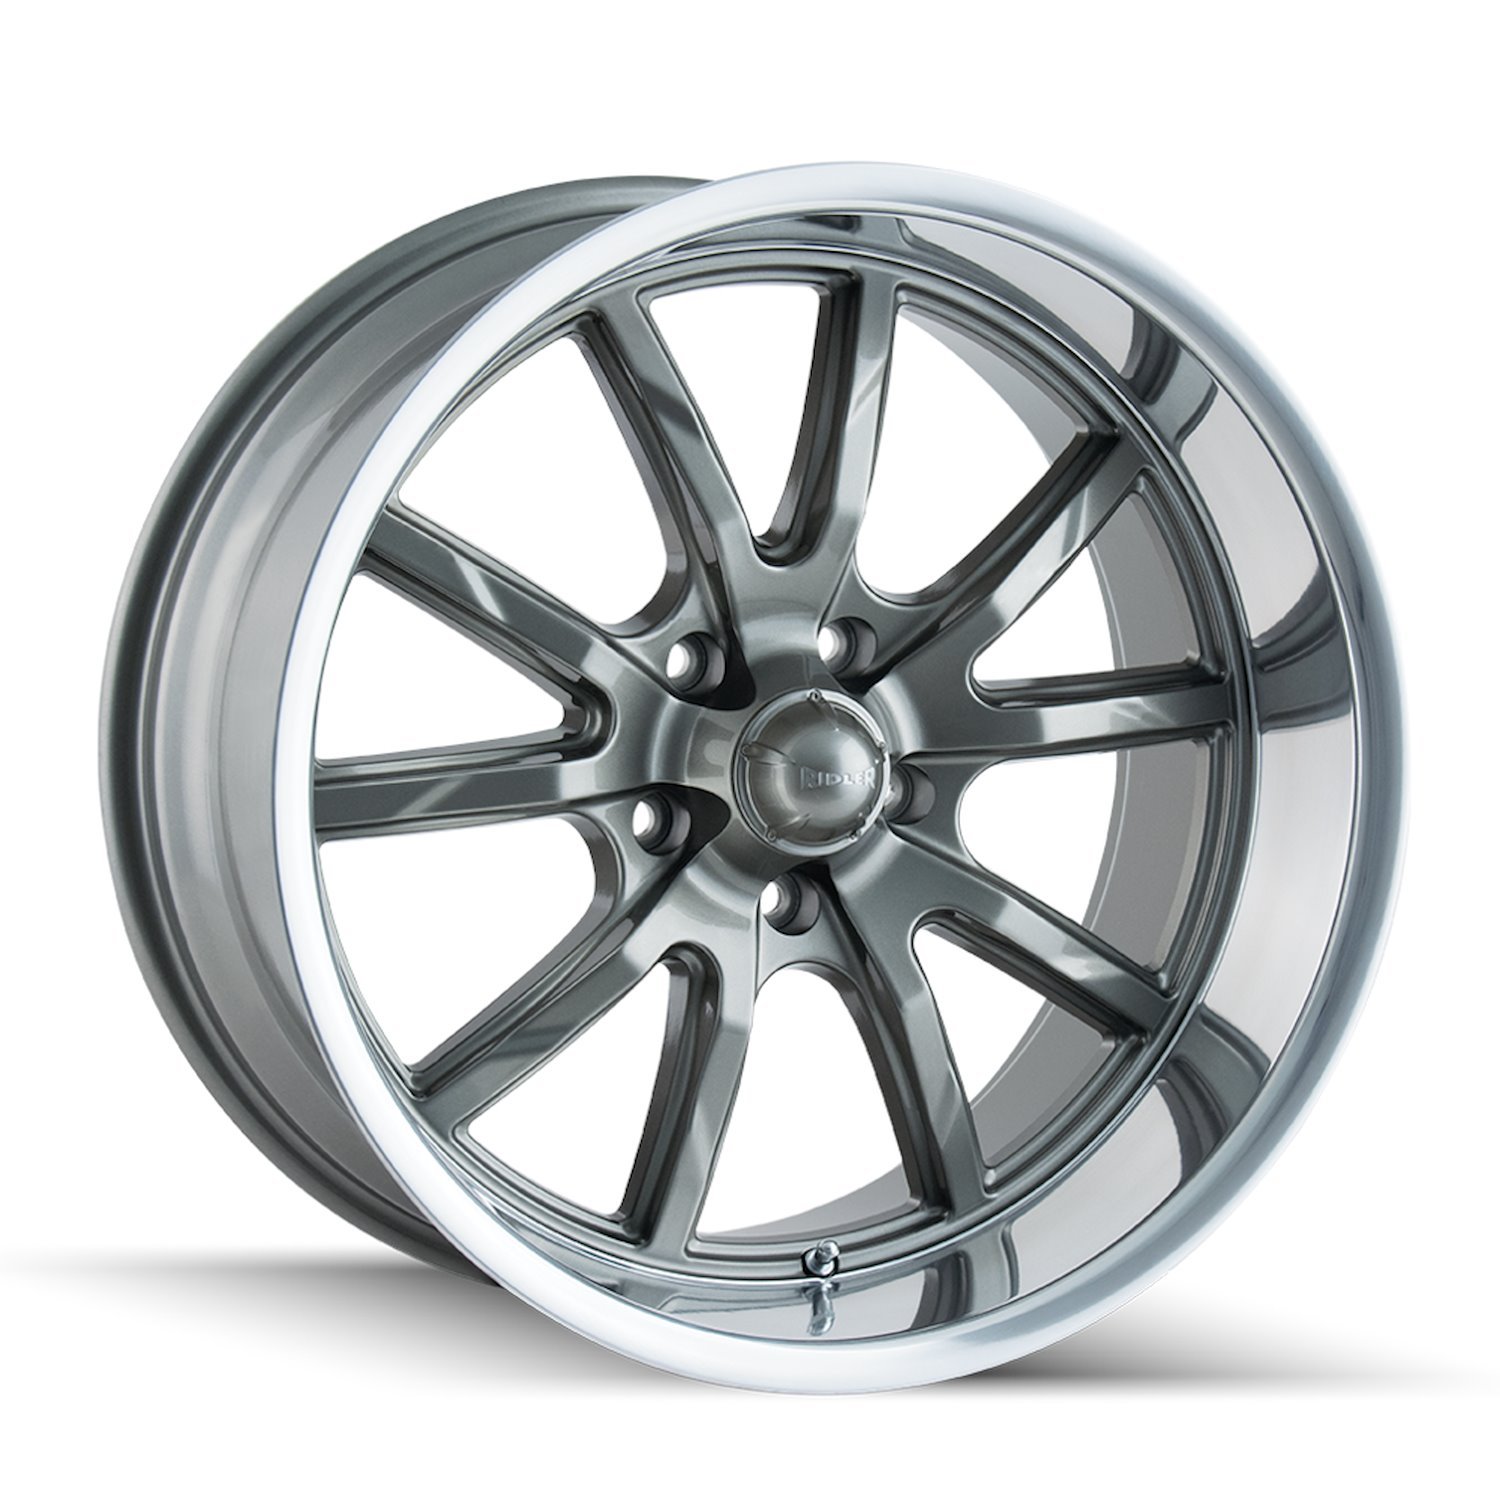 650-2812G30 650-Series Wheel [Size: 20" x 8.50"] Gloss Grey Polished Finish